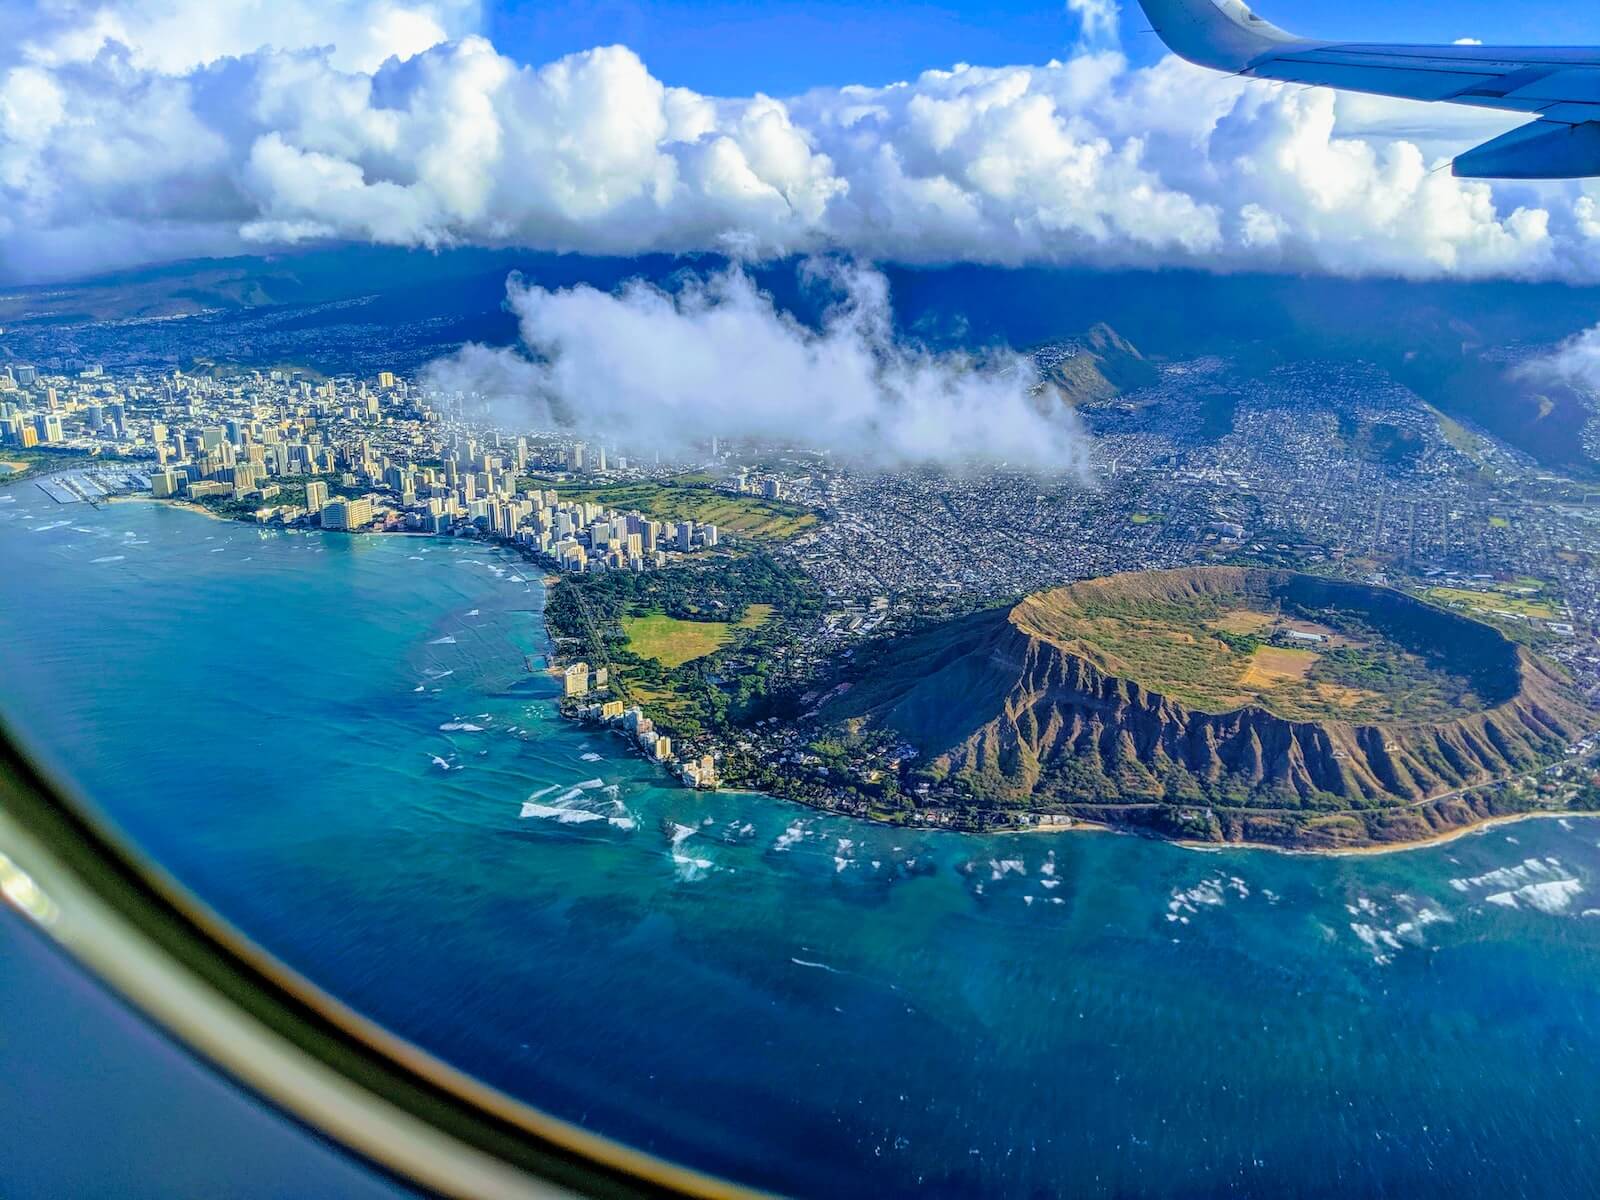 Diamond Head, Honolulu seen from above